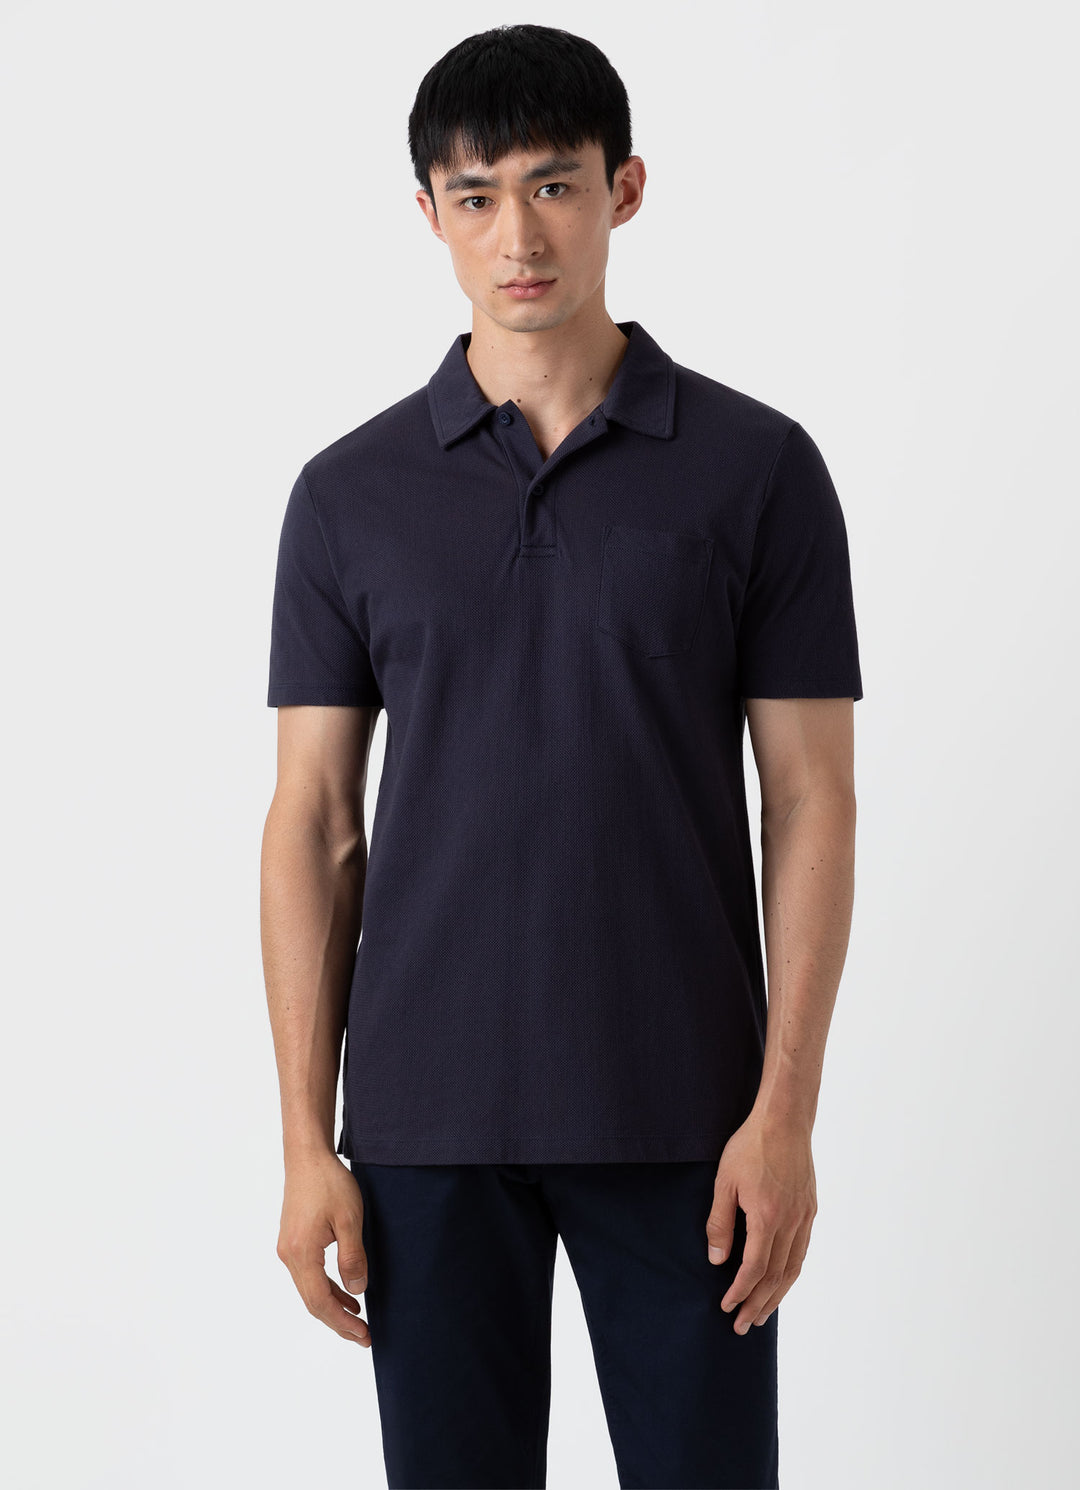 Men’s Luxury Polo Shirts | Sunspel